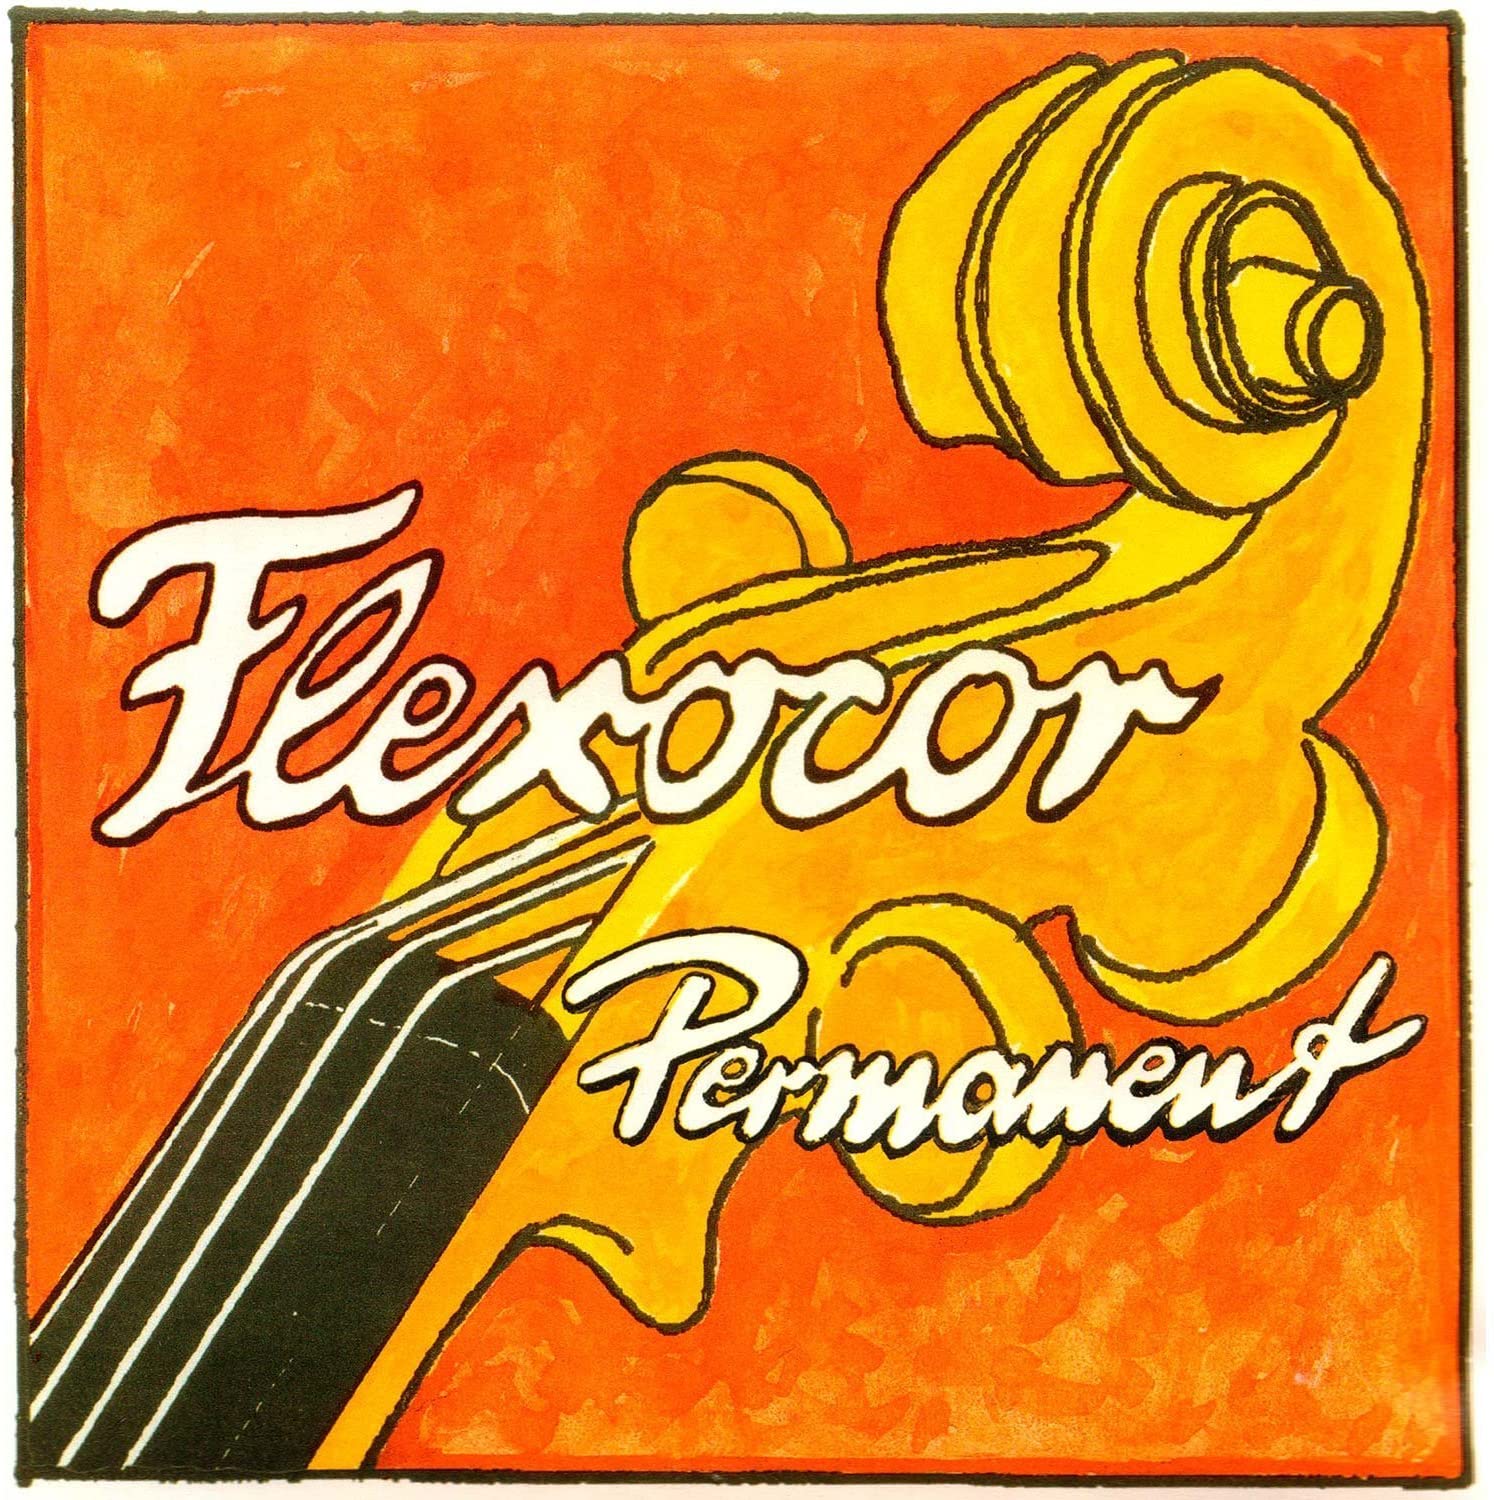 Pirastro Flexocor Permanent Violin E String